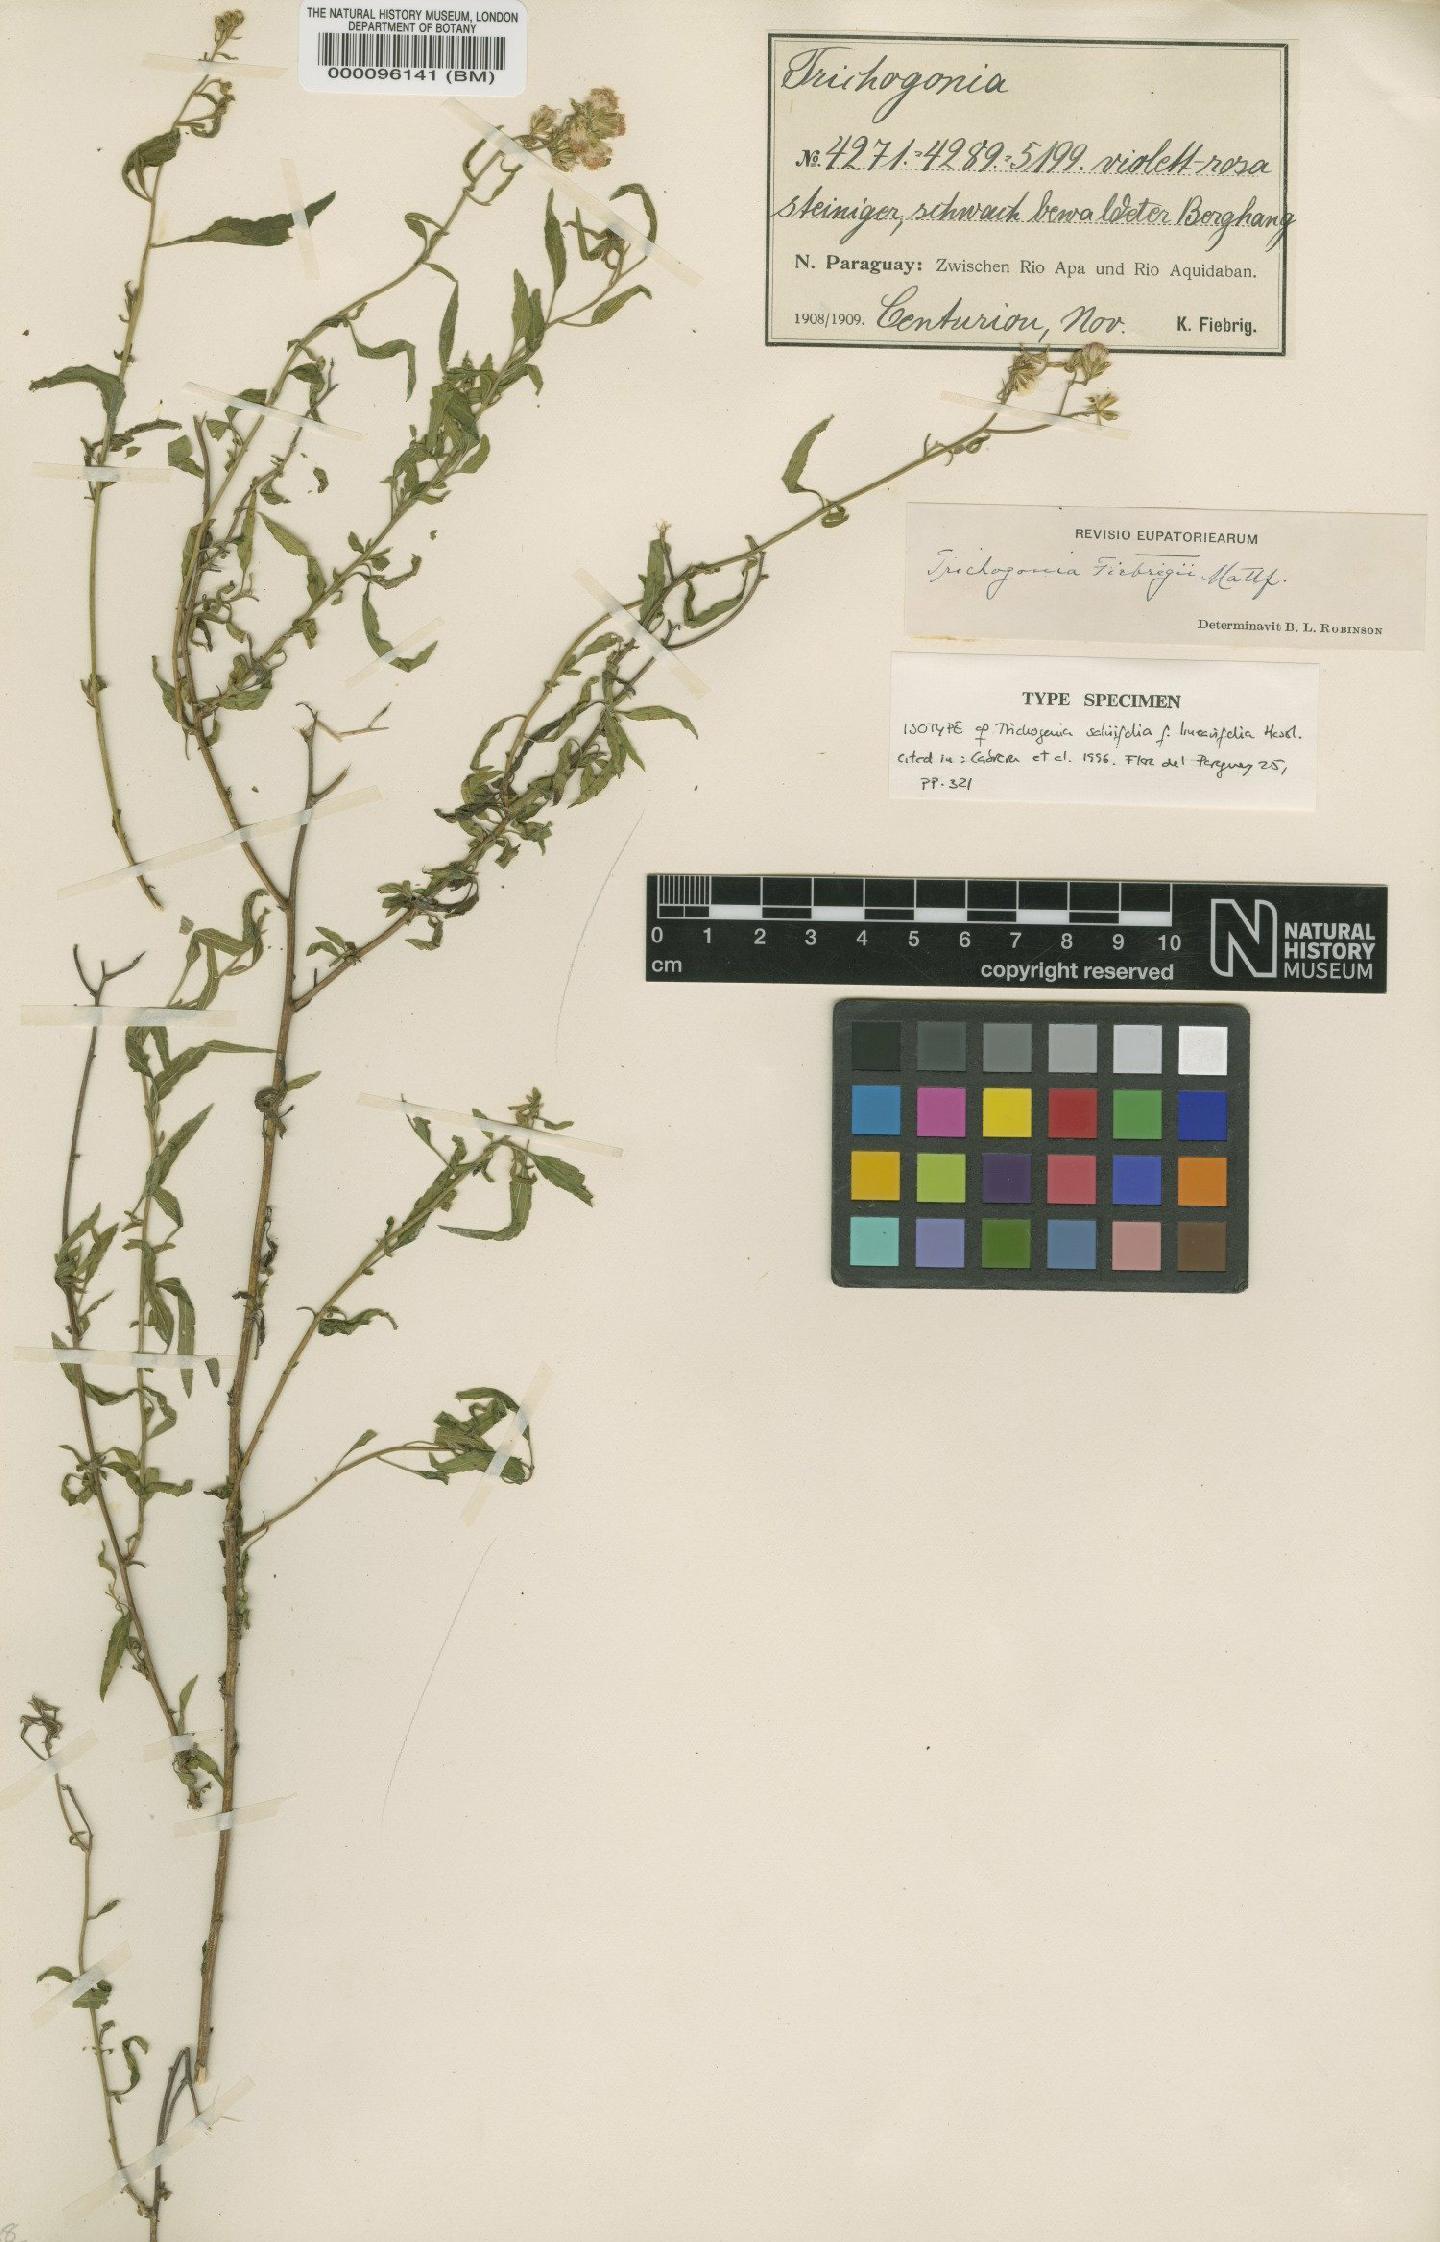 To NHMUK collection (Trichogonia fiebrigii Mattf; Isotype; NHMUK:ecatalogue:4567330)